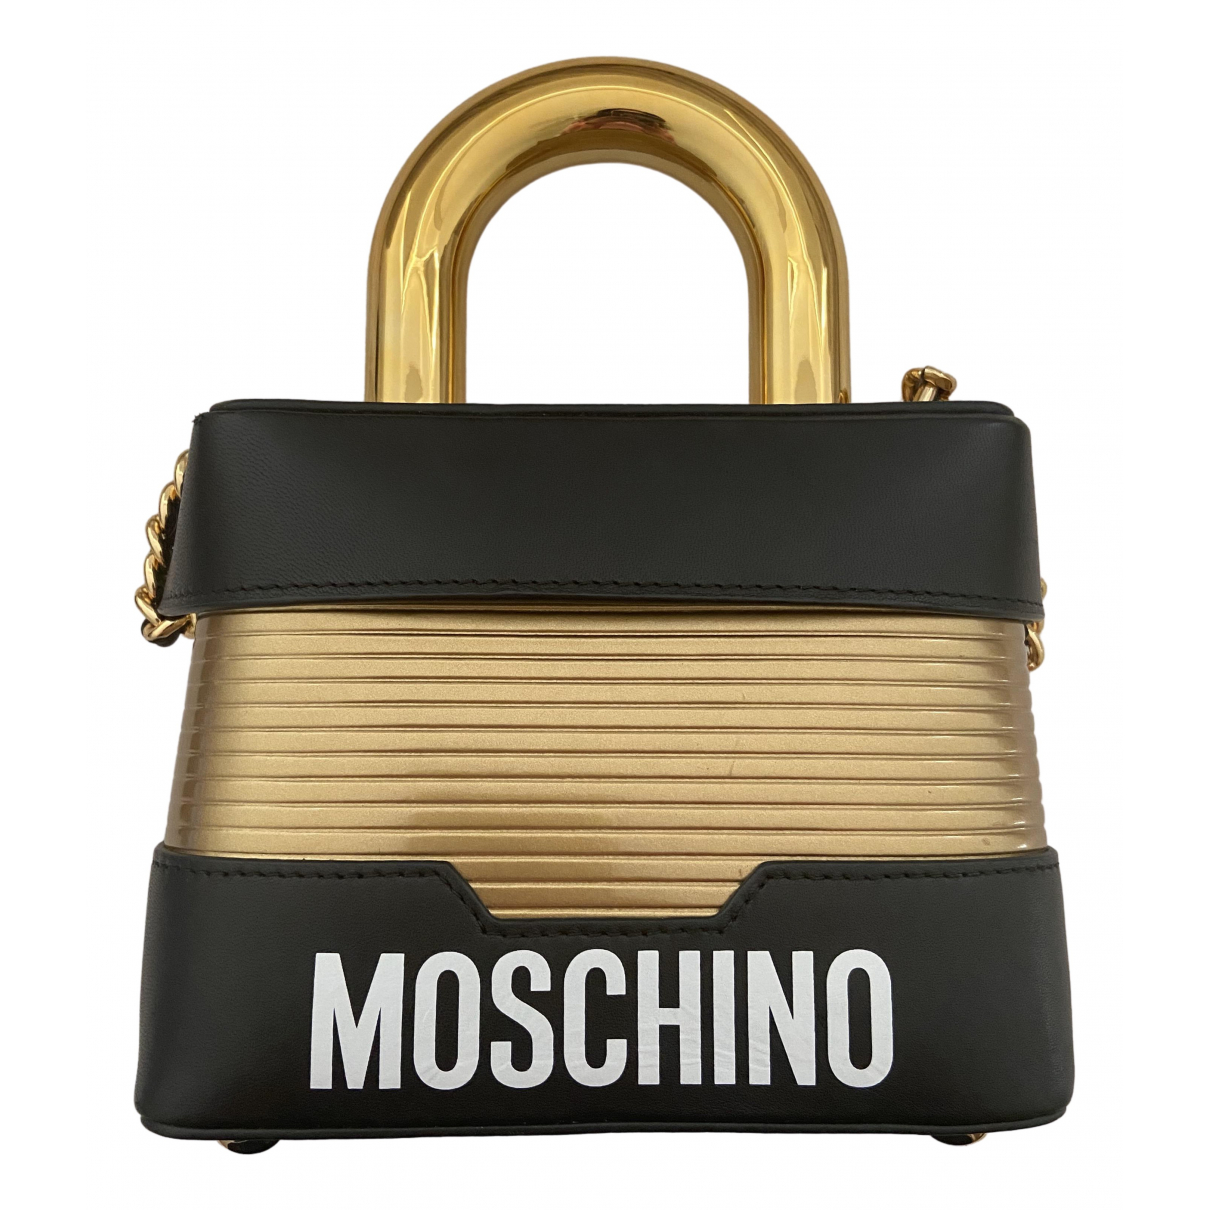 moschino h&m handbag